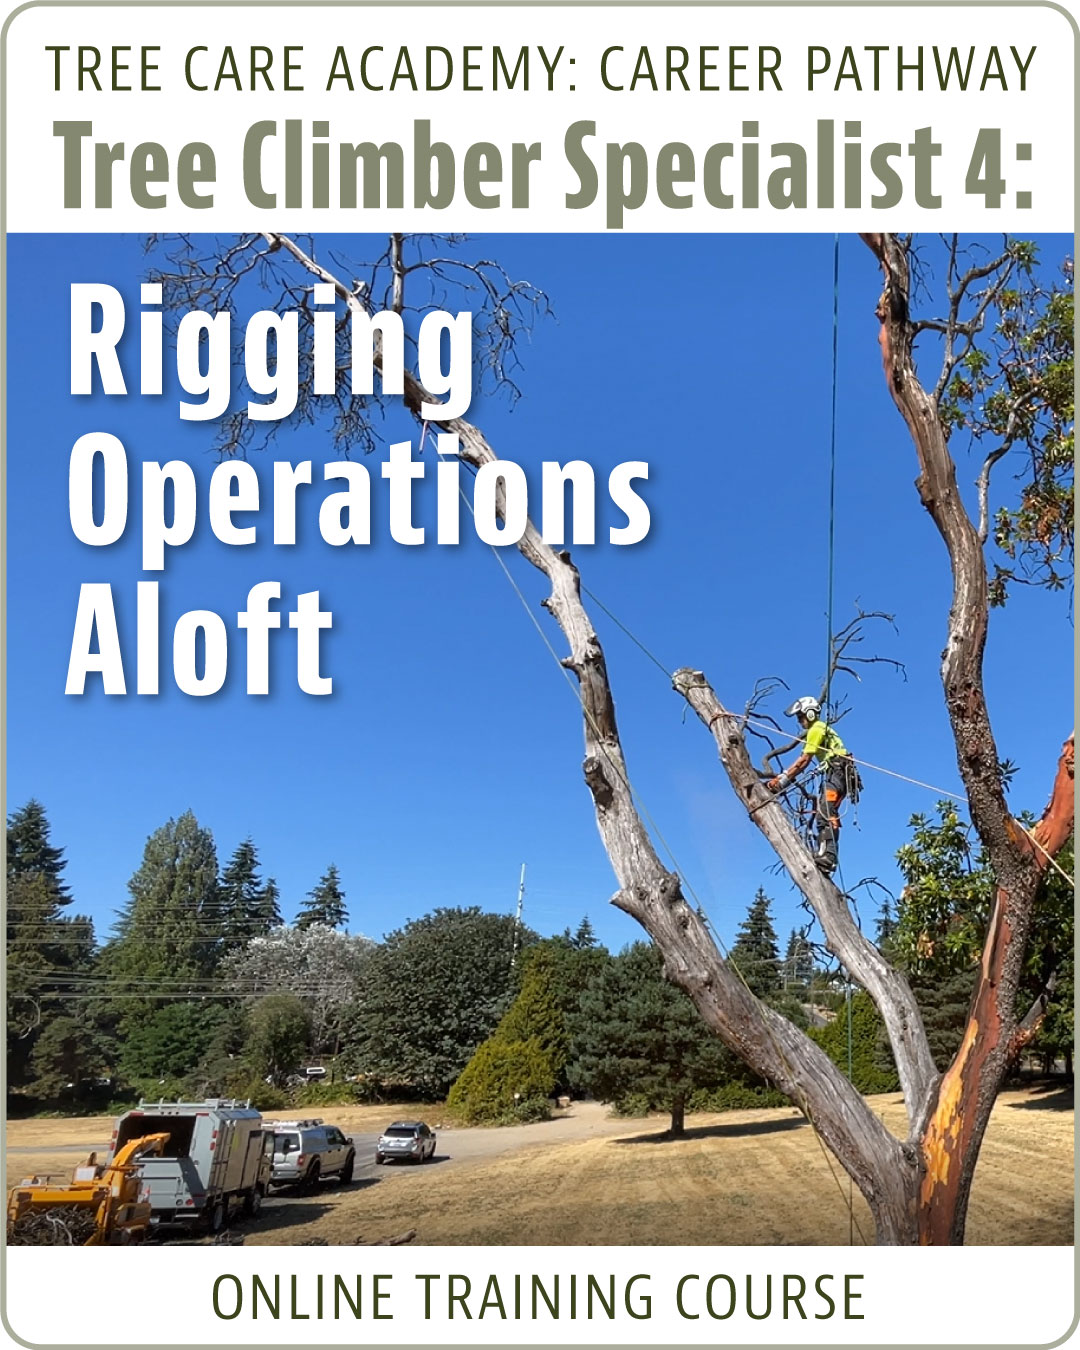 Tree Climber Specialist 3: Climbing Aerial Rescue